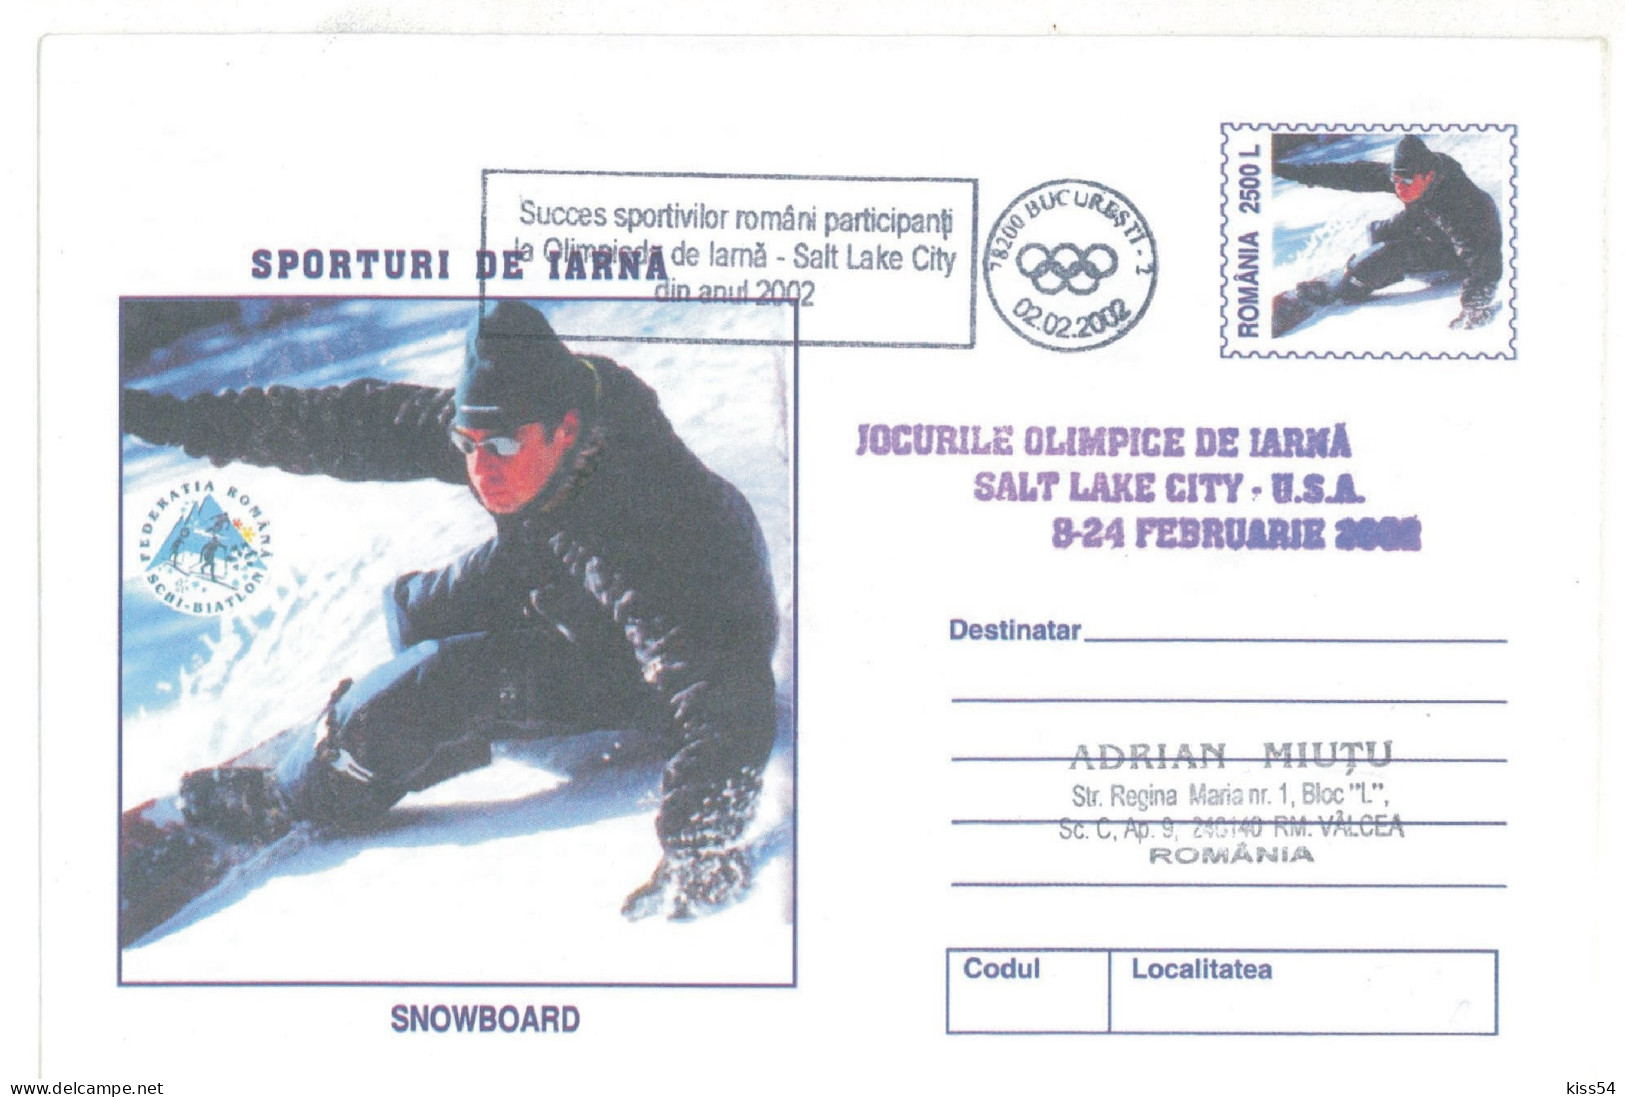 IP 2001 - 0231a U. S. A. SALT LAKE CITY 2002 - SNOWBOARD - Winter Olympic Games - Stationery - Used - 2001 - Winter 2002: Salt Lake City